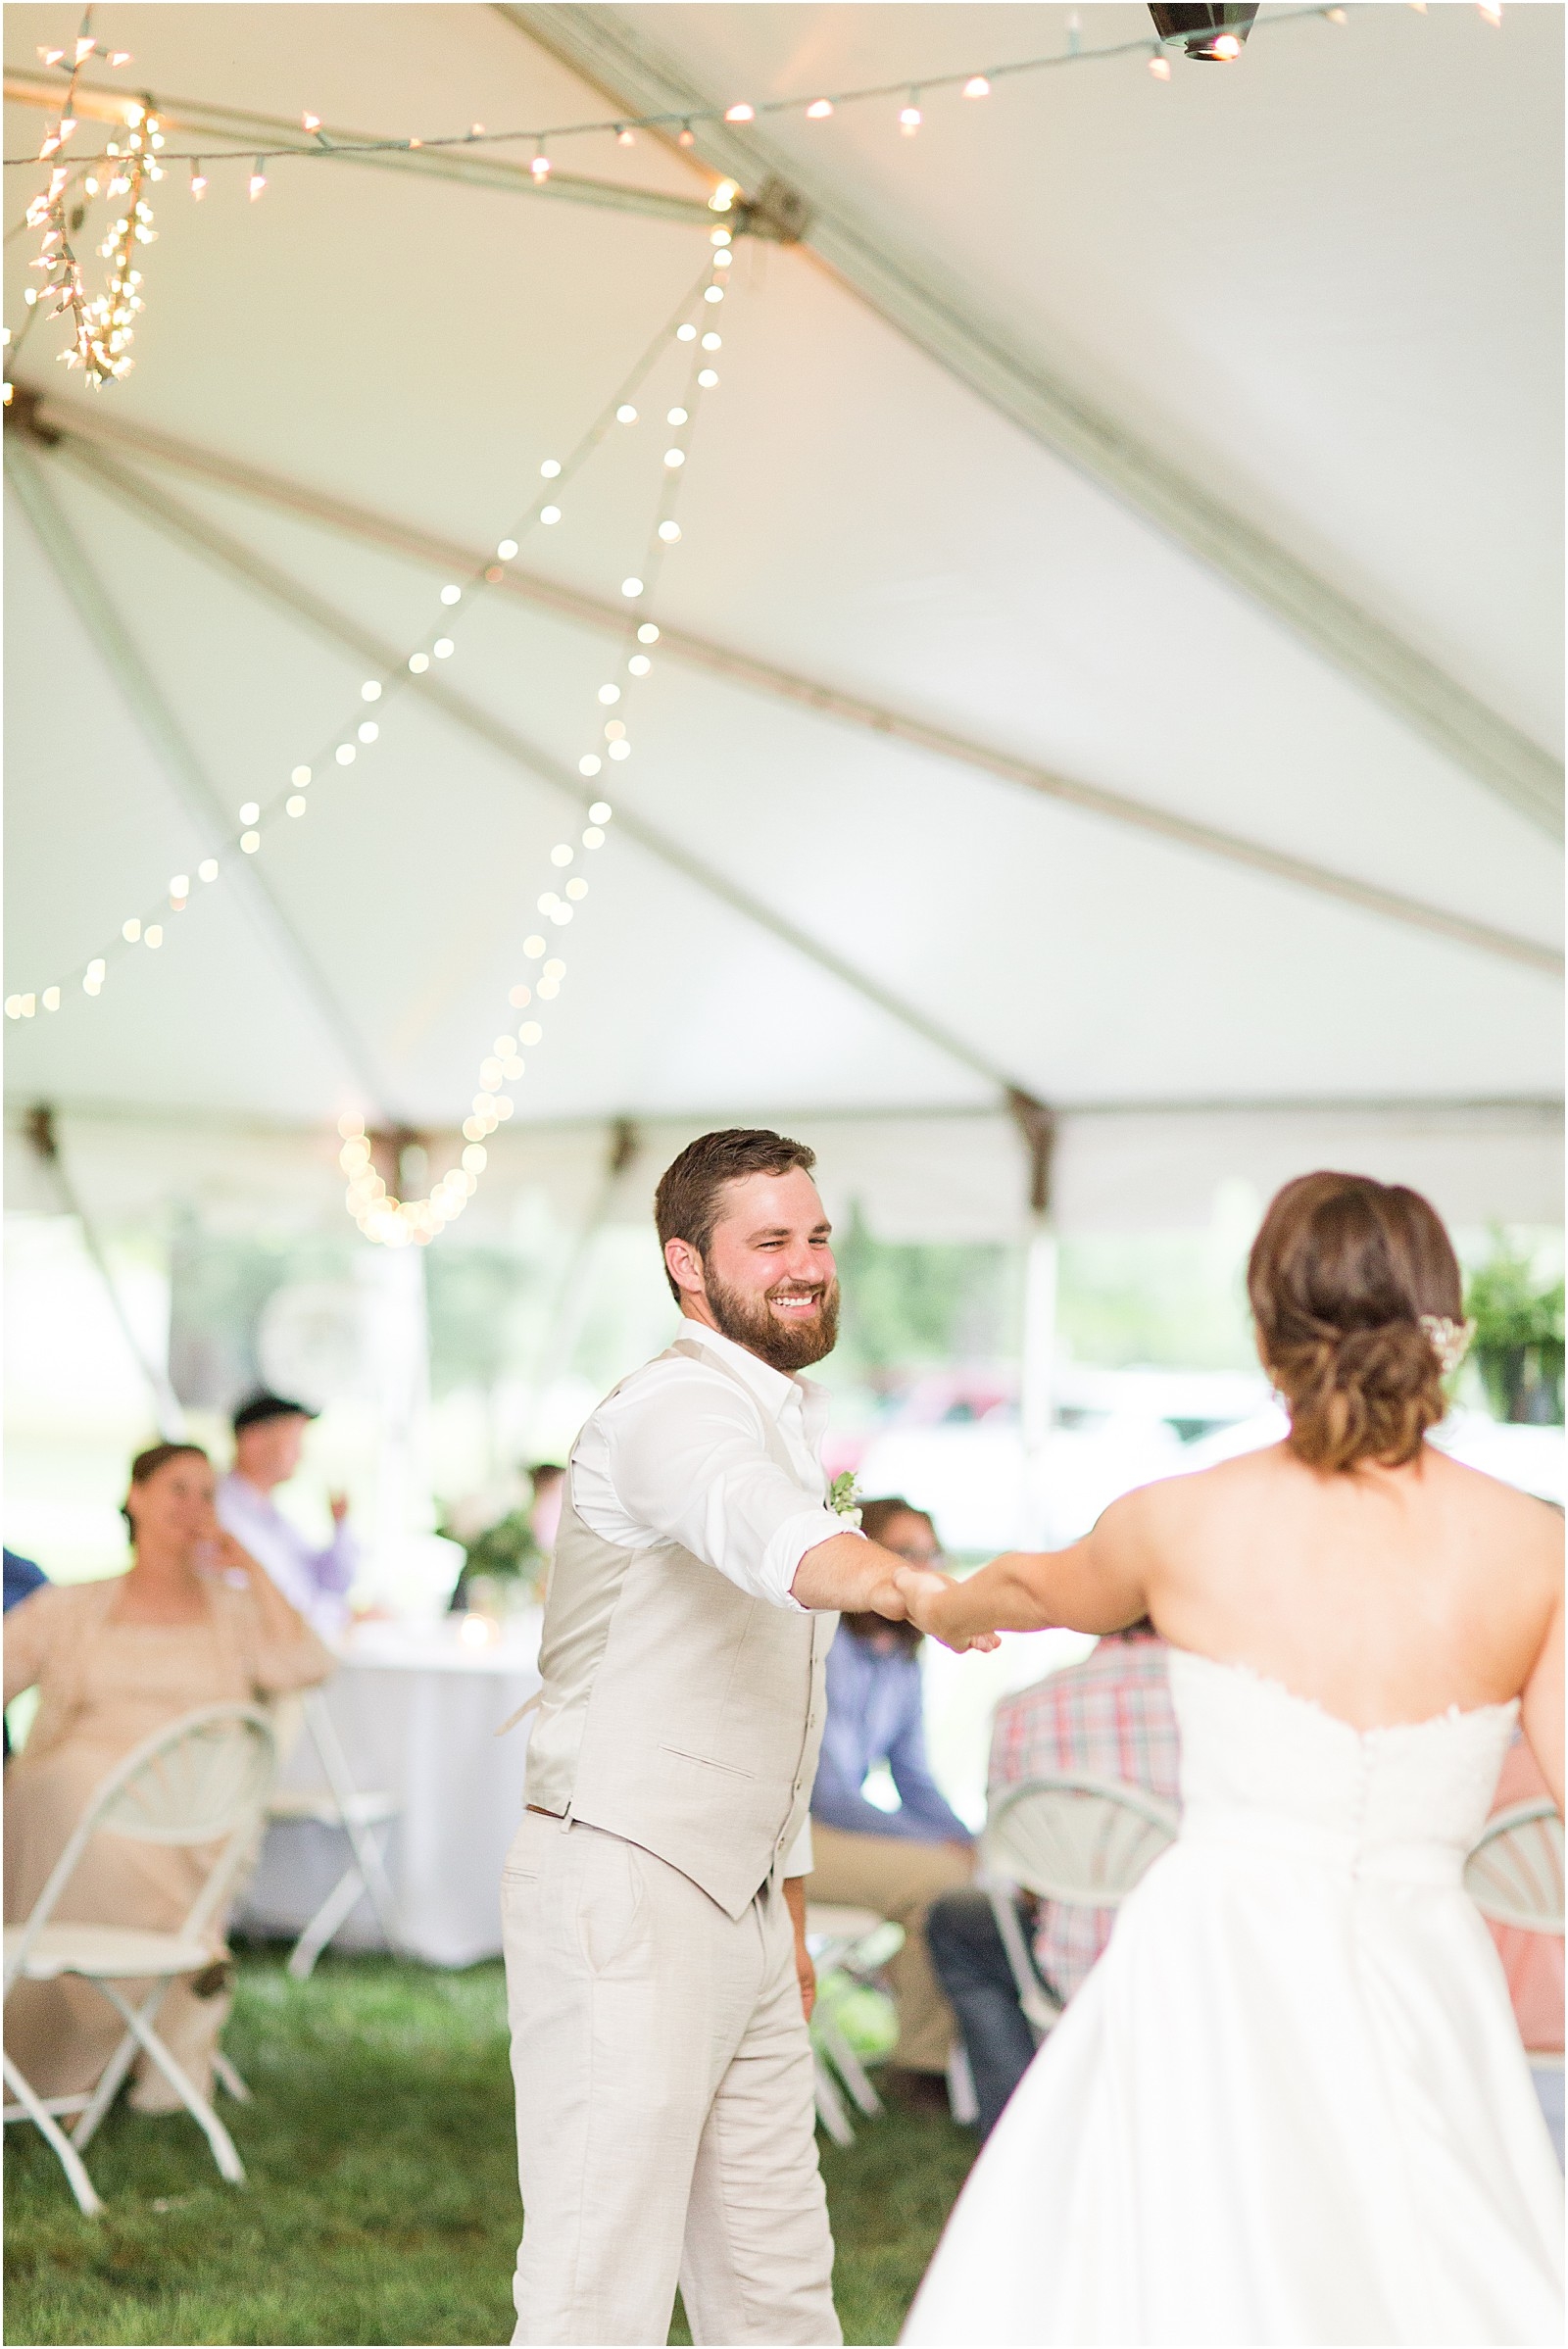 A Evansville Indiana Backyard Wedding | Bailey and Ben 085.jpg